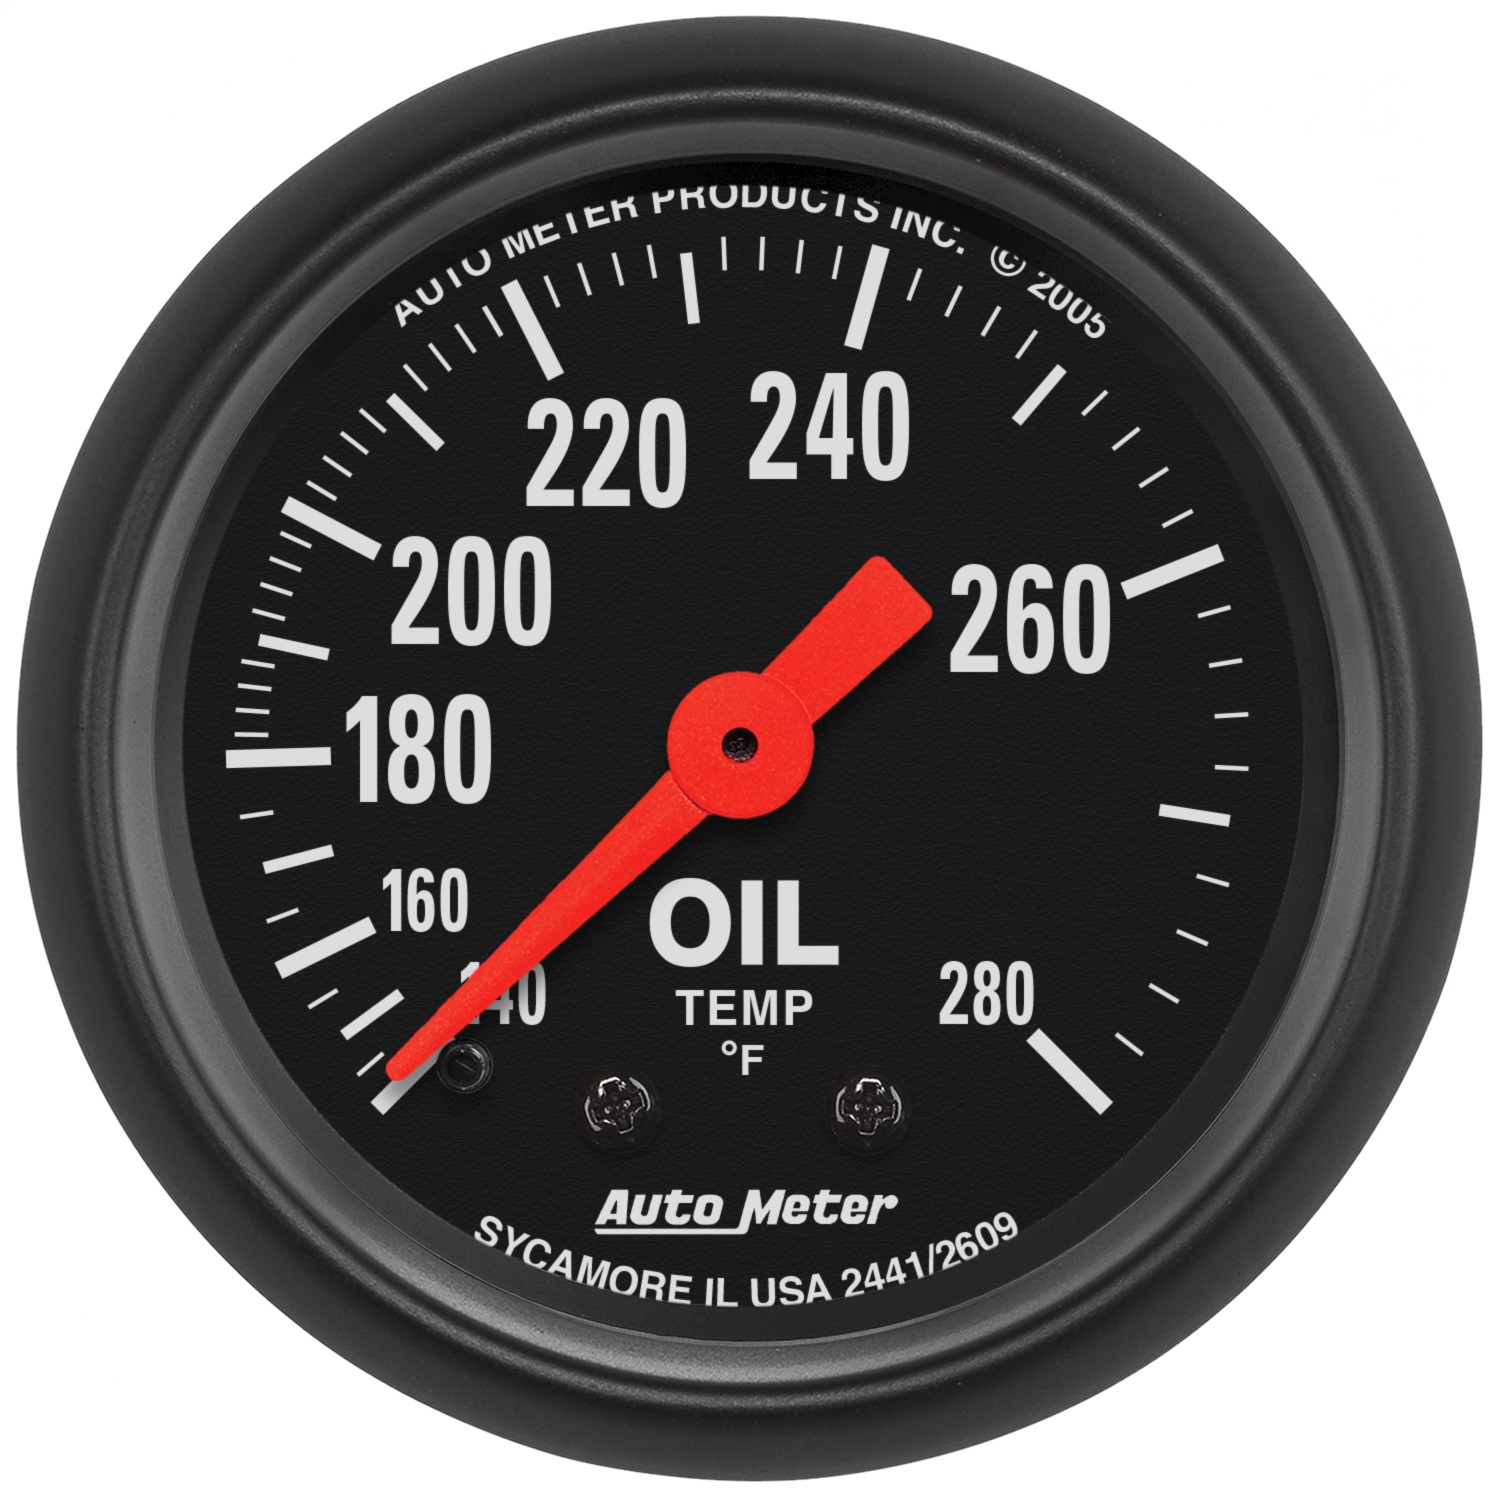 Auto Meter Auto Meter 2609 Z-Series; Mechanical Oil Temperature Gauge